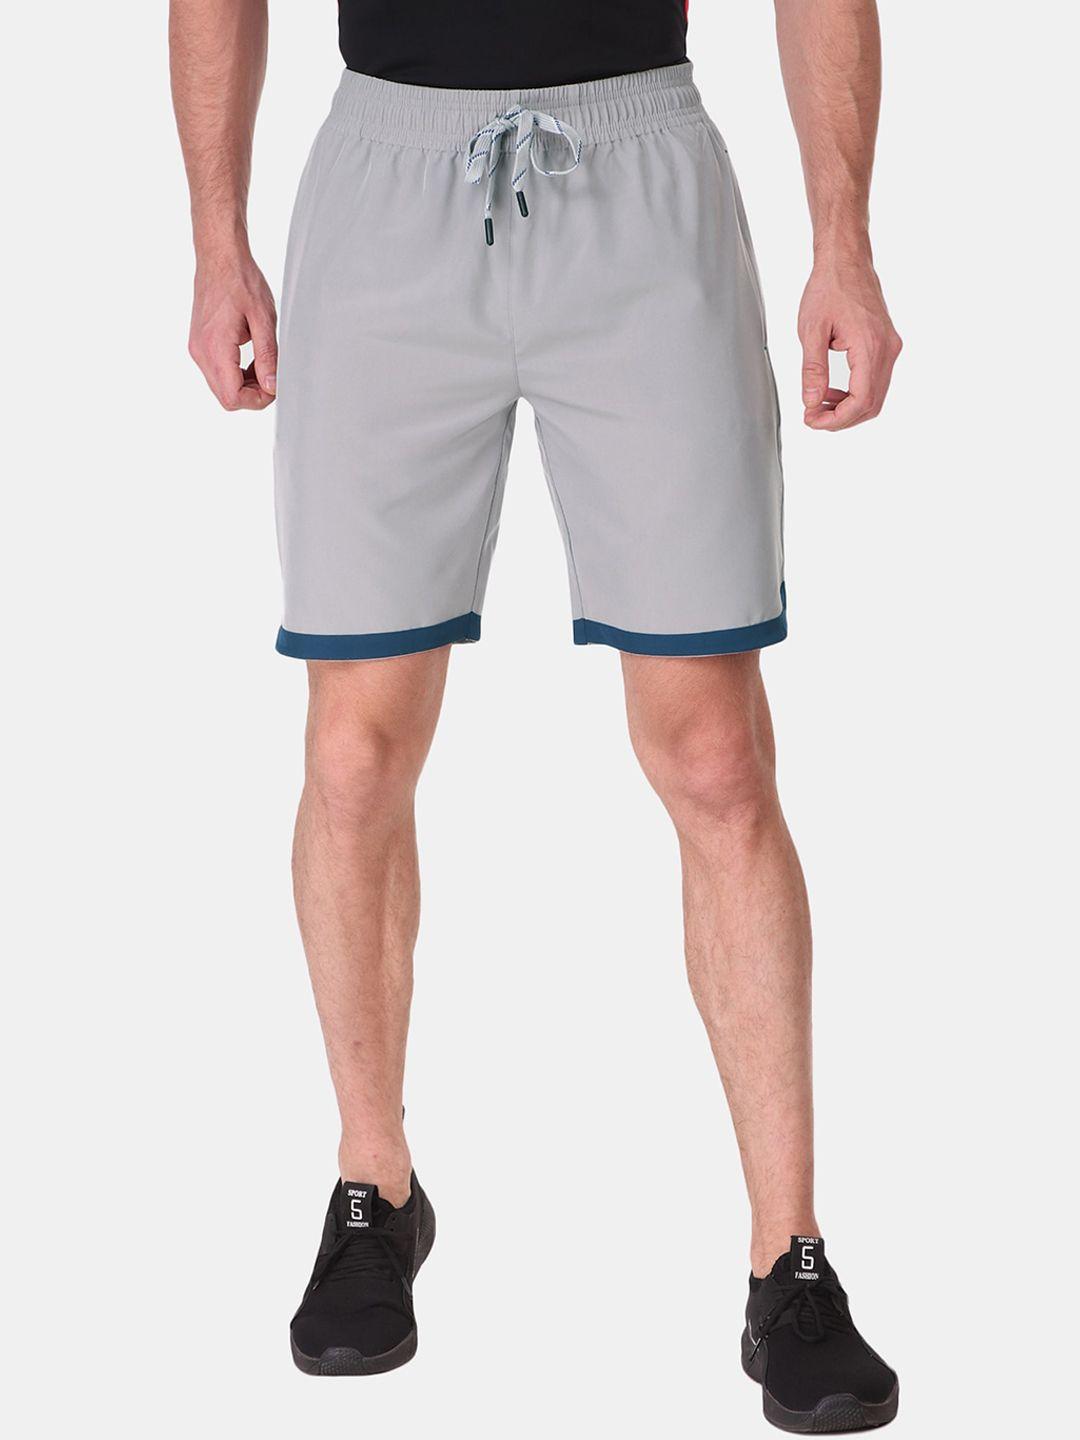 fitinc men grey rapid dry running sports shorts